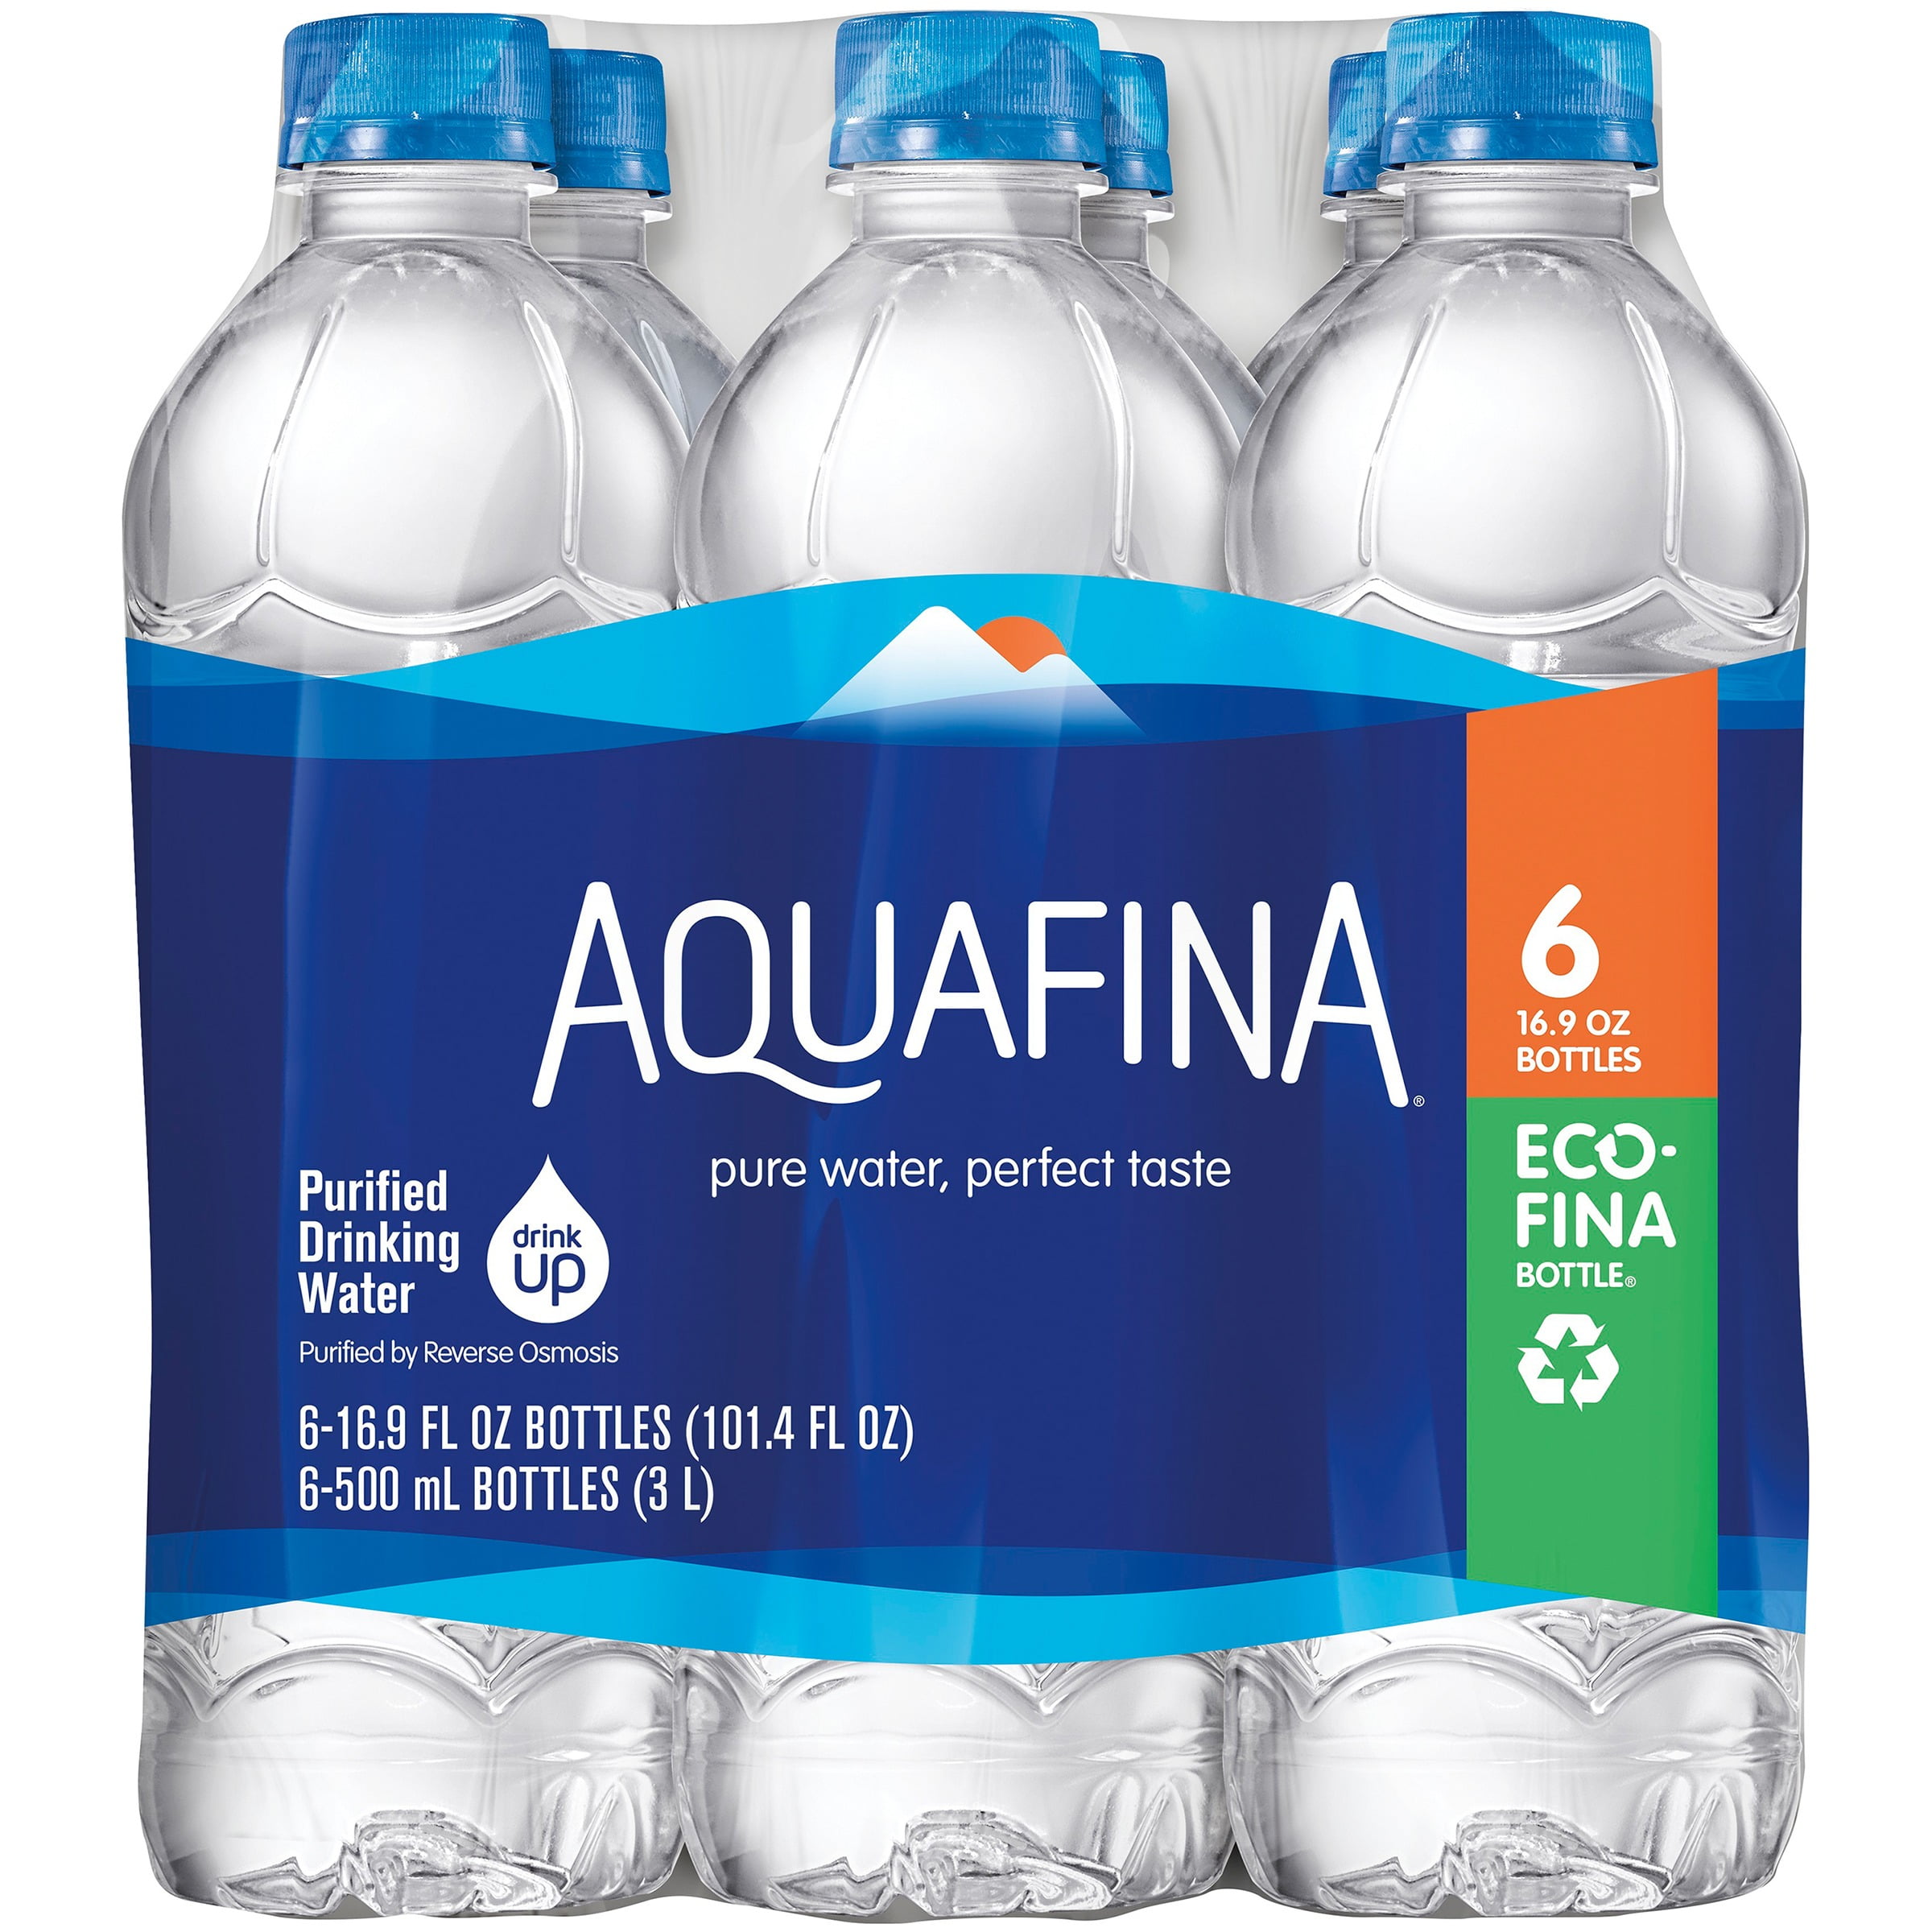 Aquafina Purified Drinking Water 6169 fl. oz. Bottles